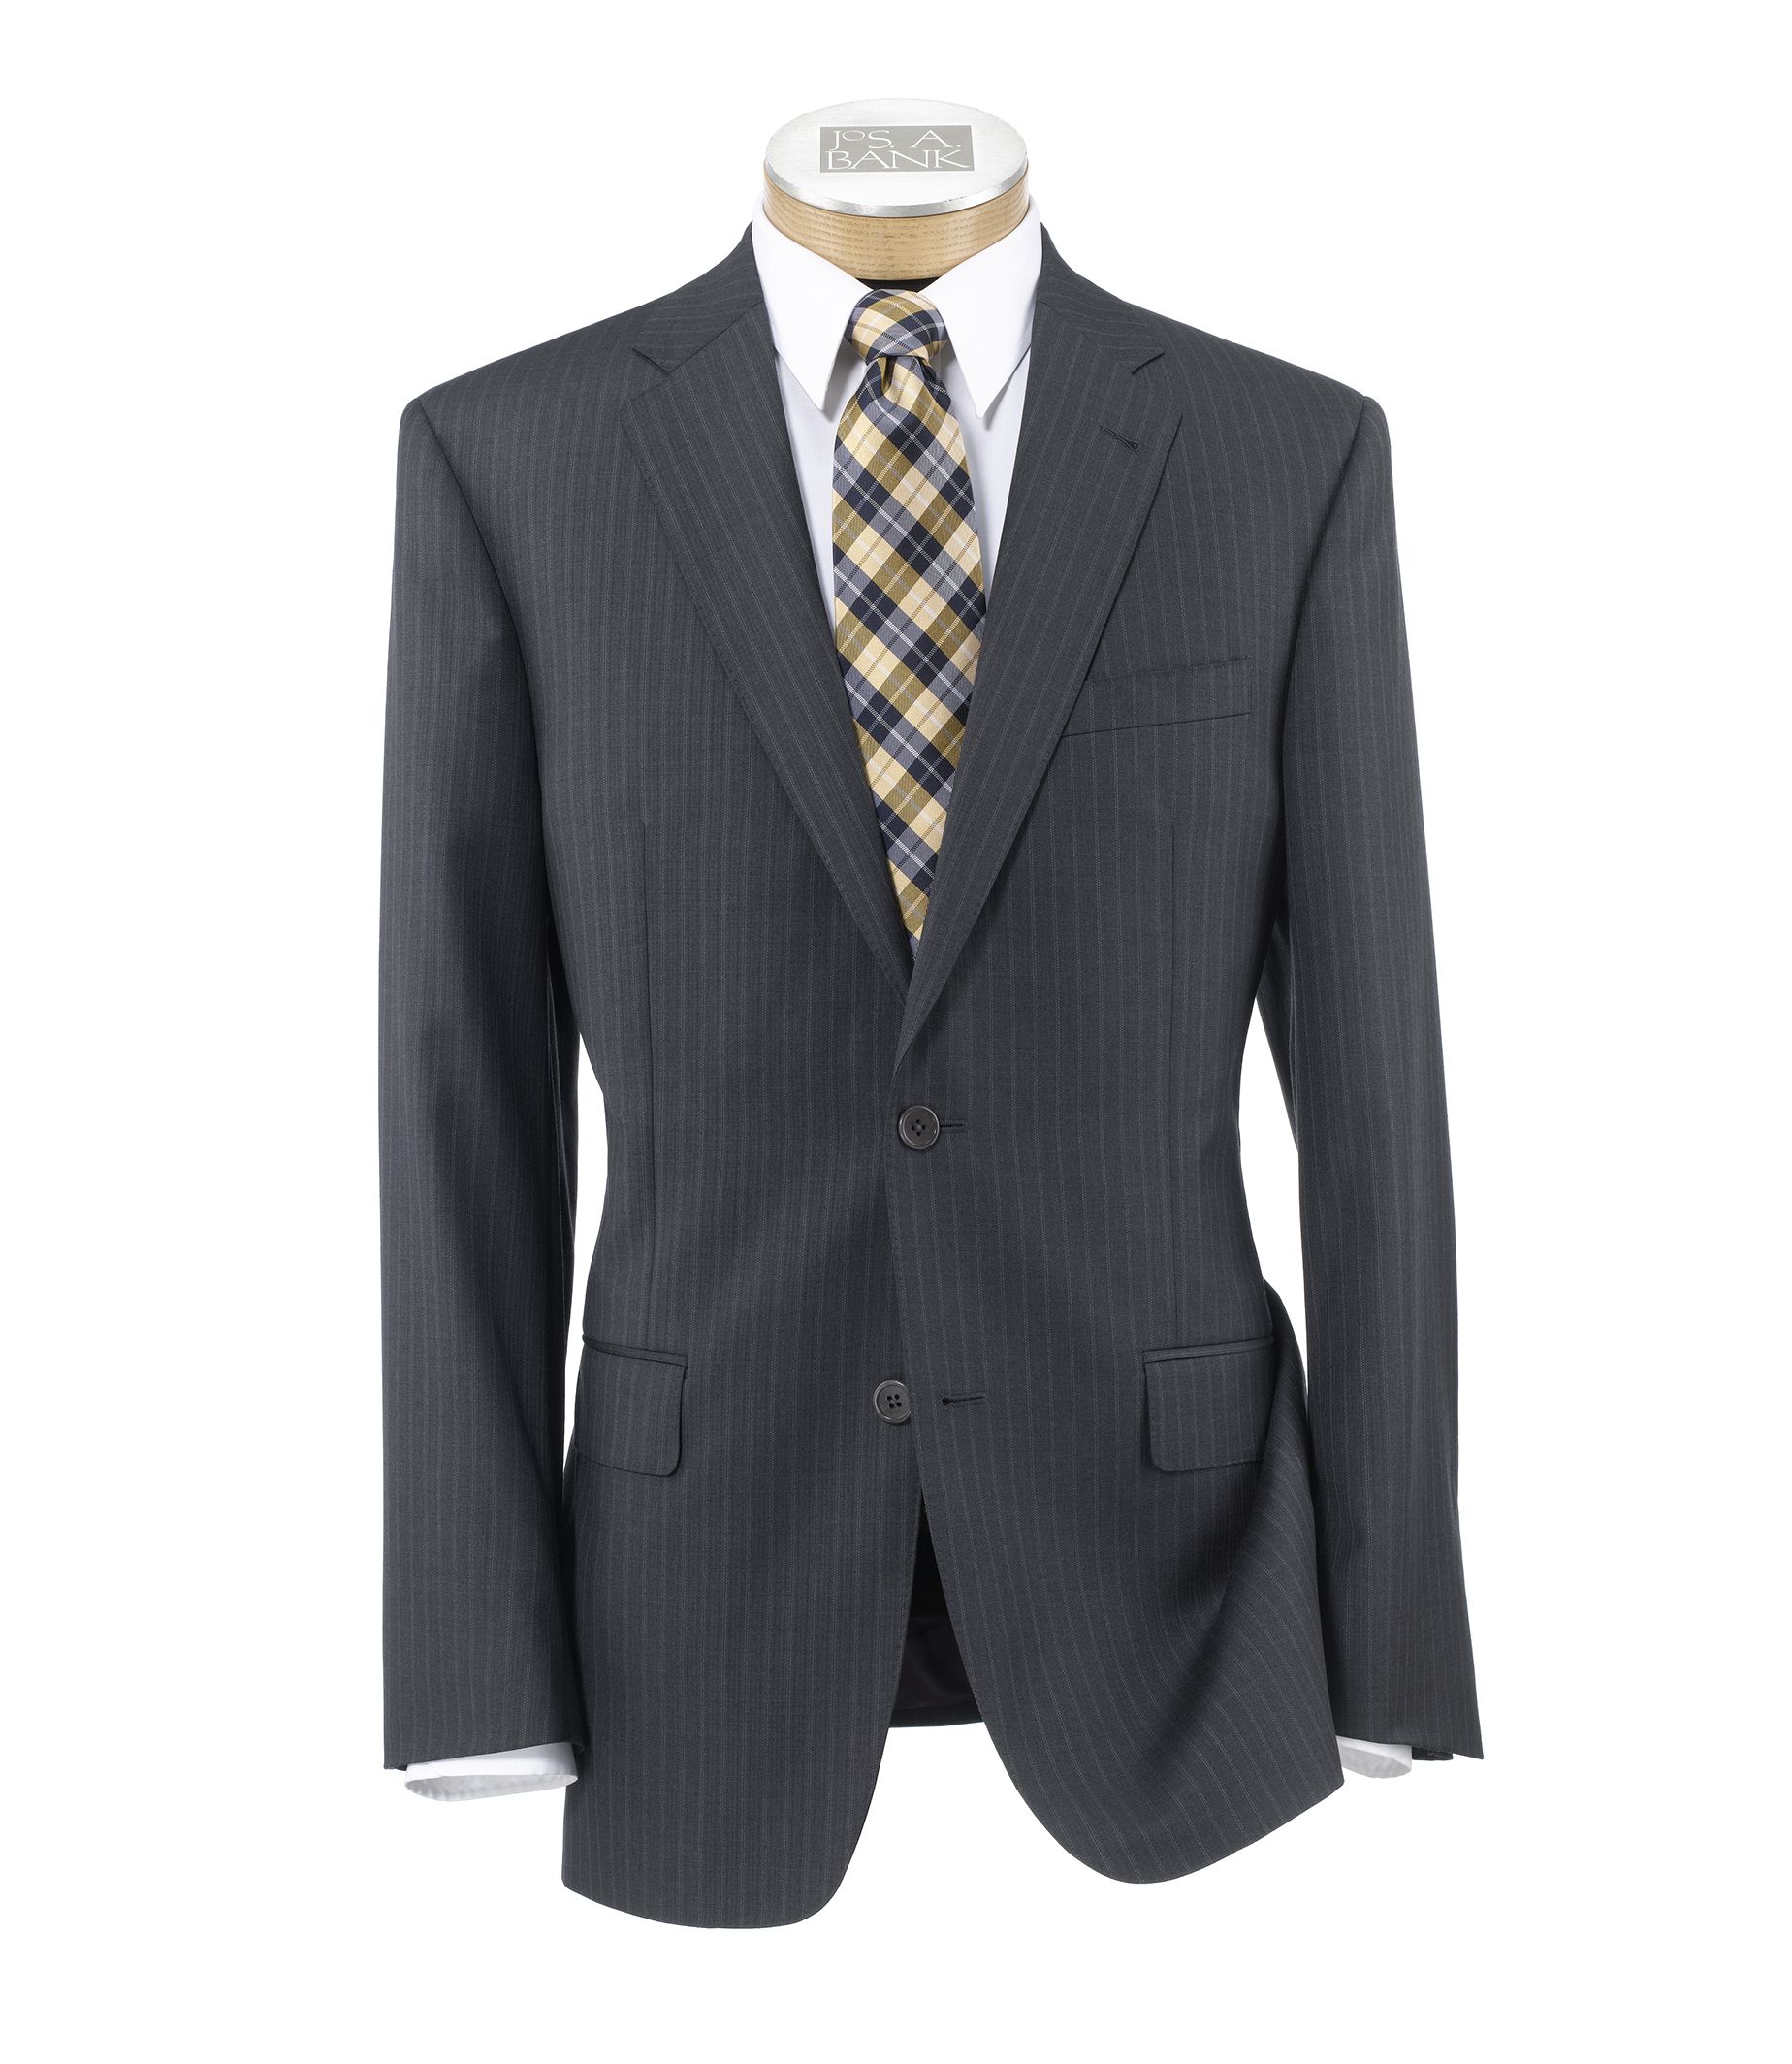 Men's Suits | Black, Navy & Grey Business Suits | JoS. A. Bank